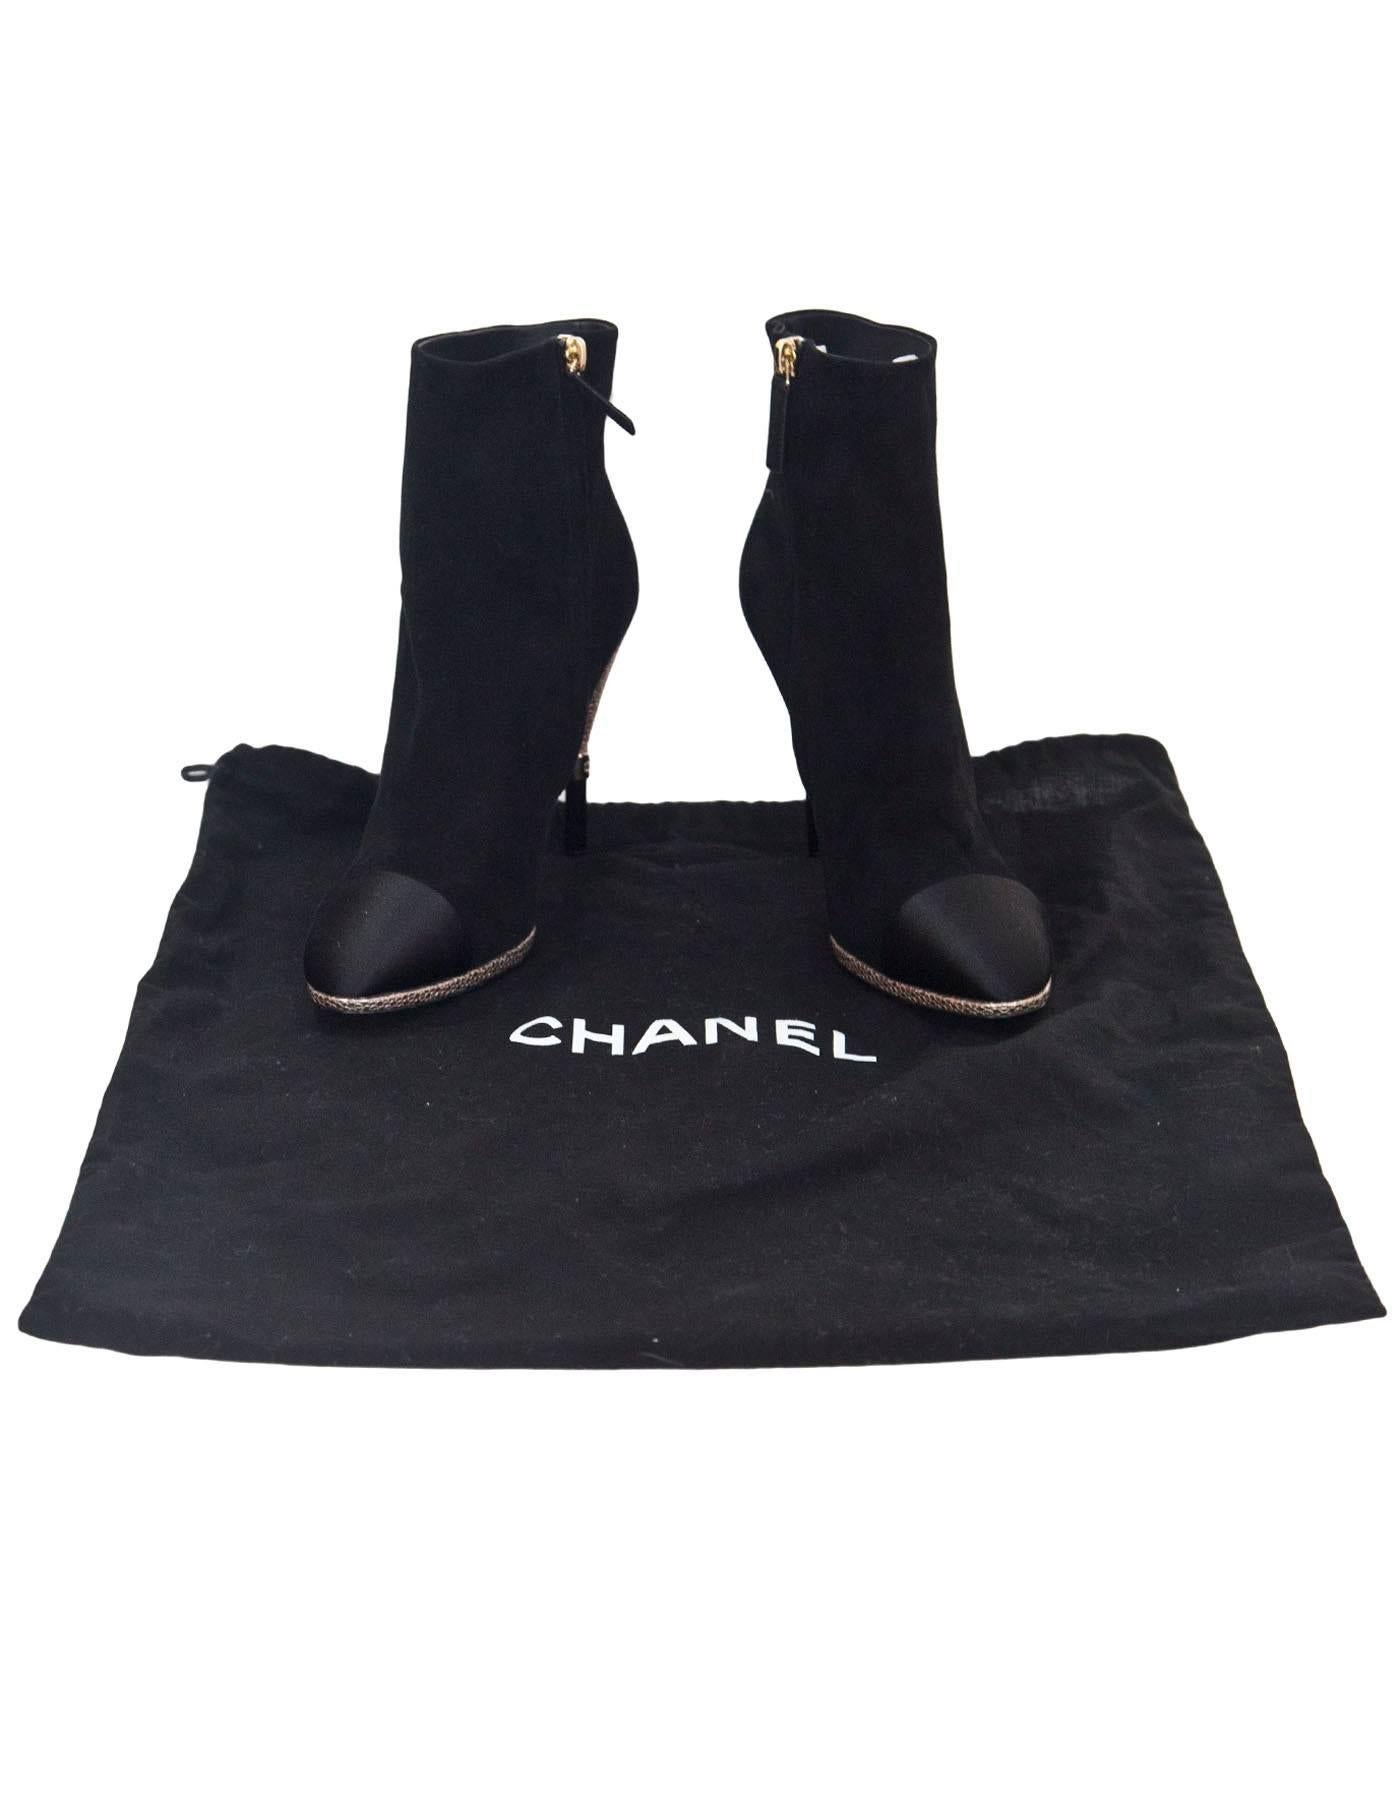 Chanel Black Suede & Satin Cap-Toe Ankle Boots Sz 39C NEW 2